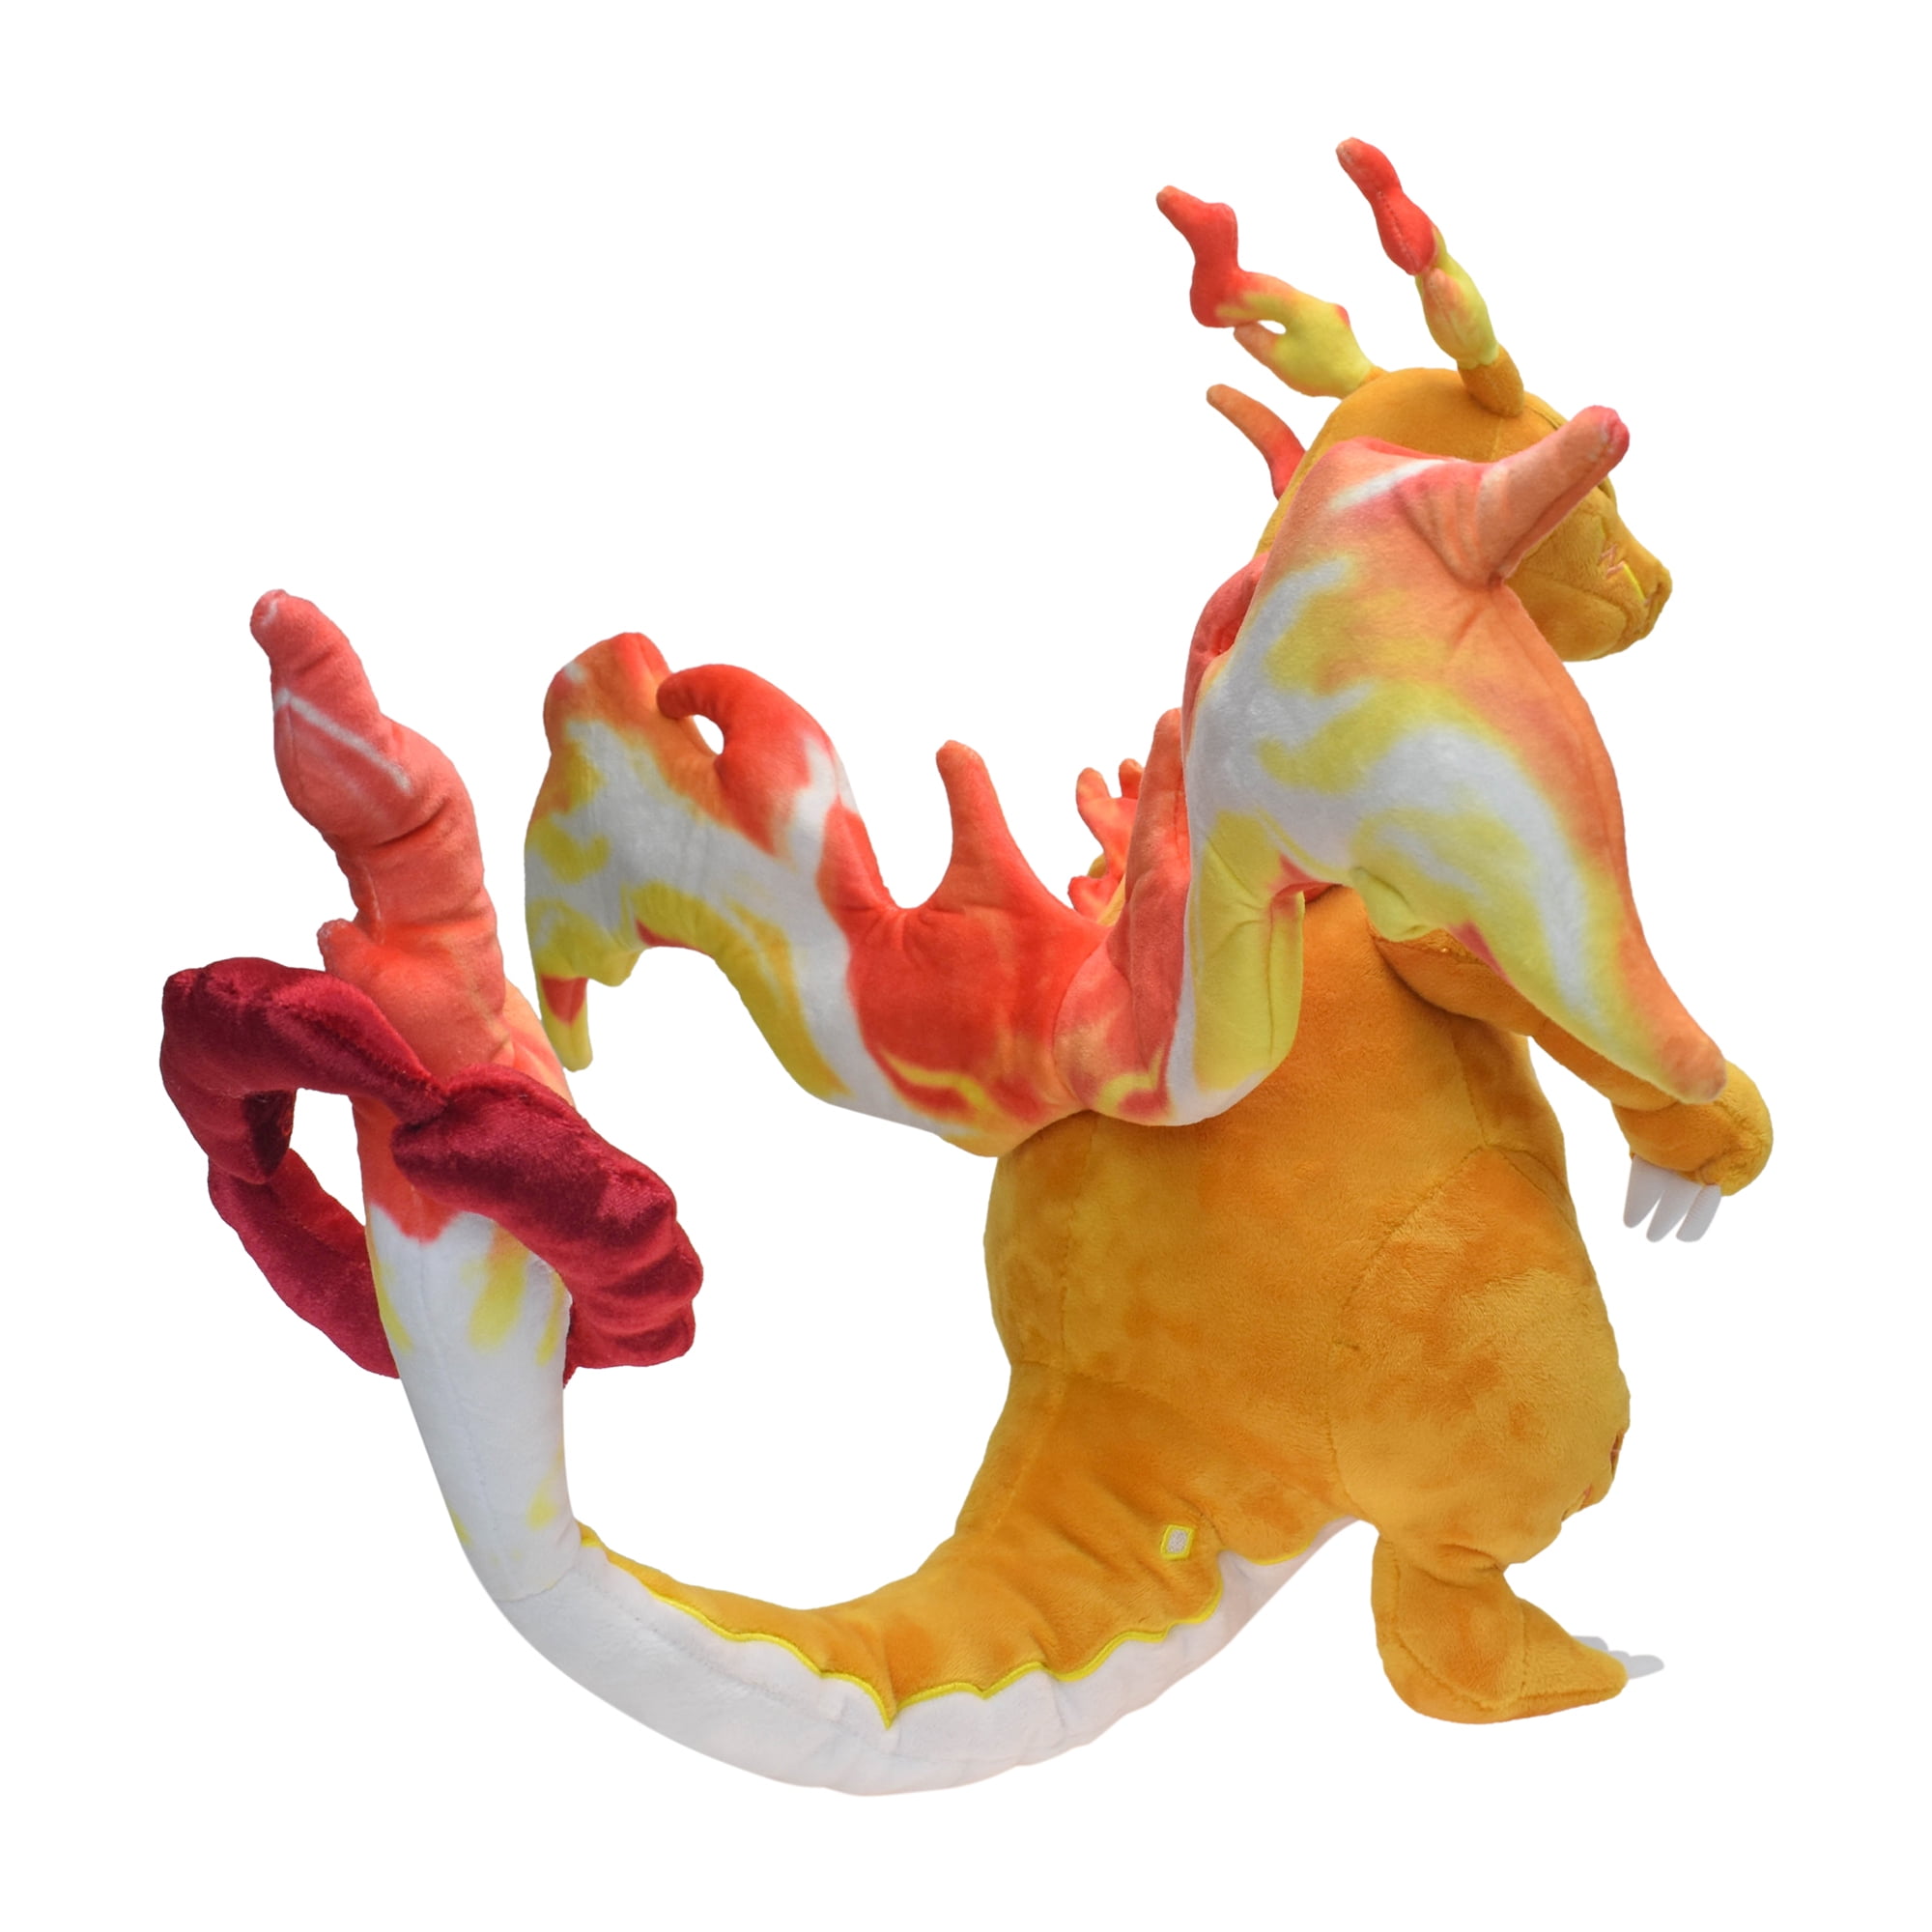 Sofunic Pok-mon Plush Toys 8 Shiny Charizard Stuffed Animal